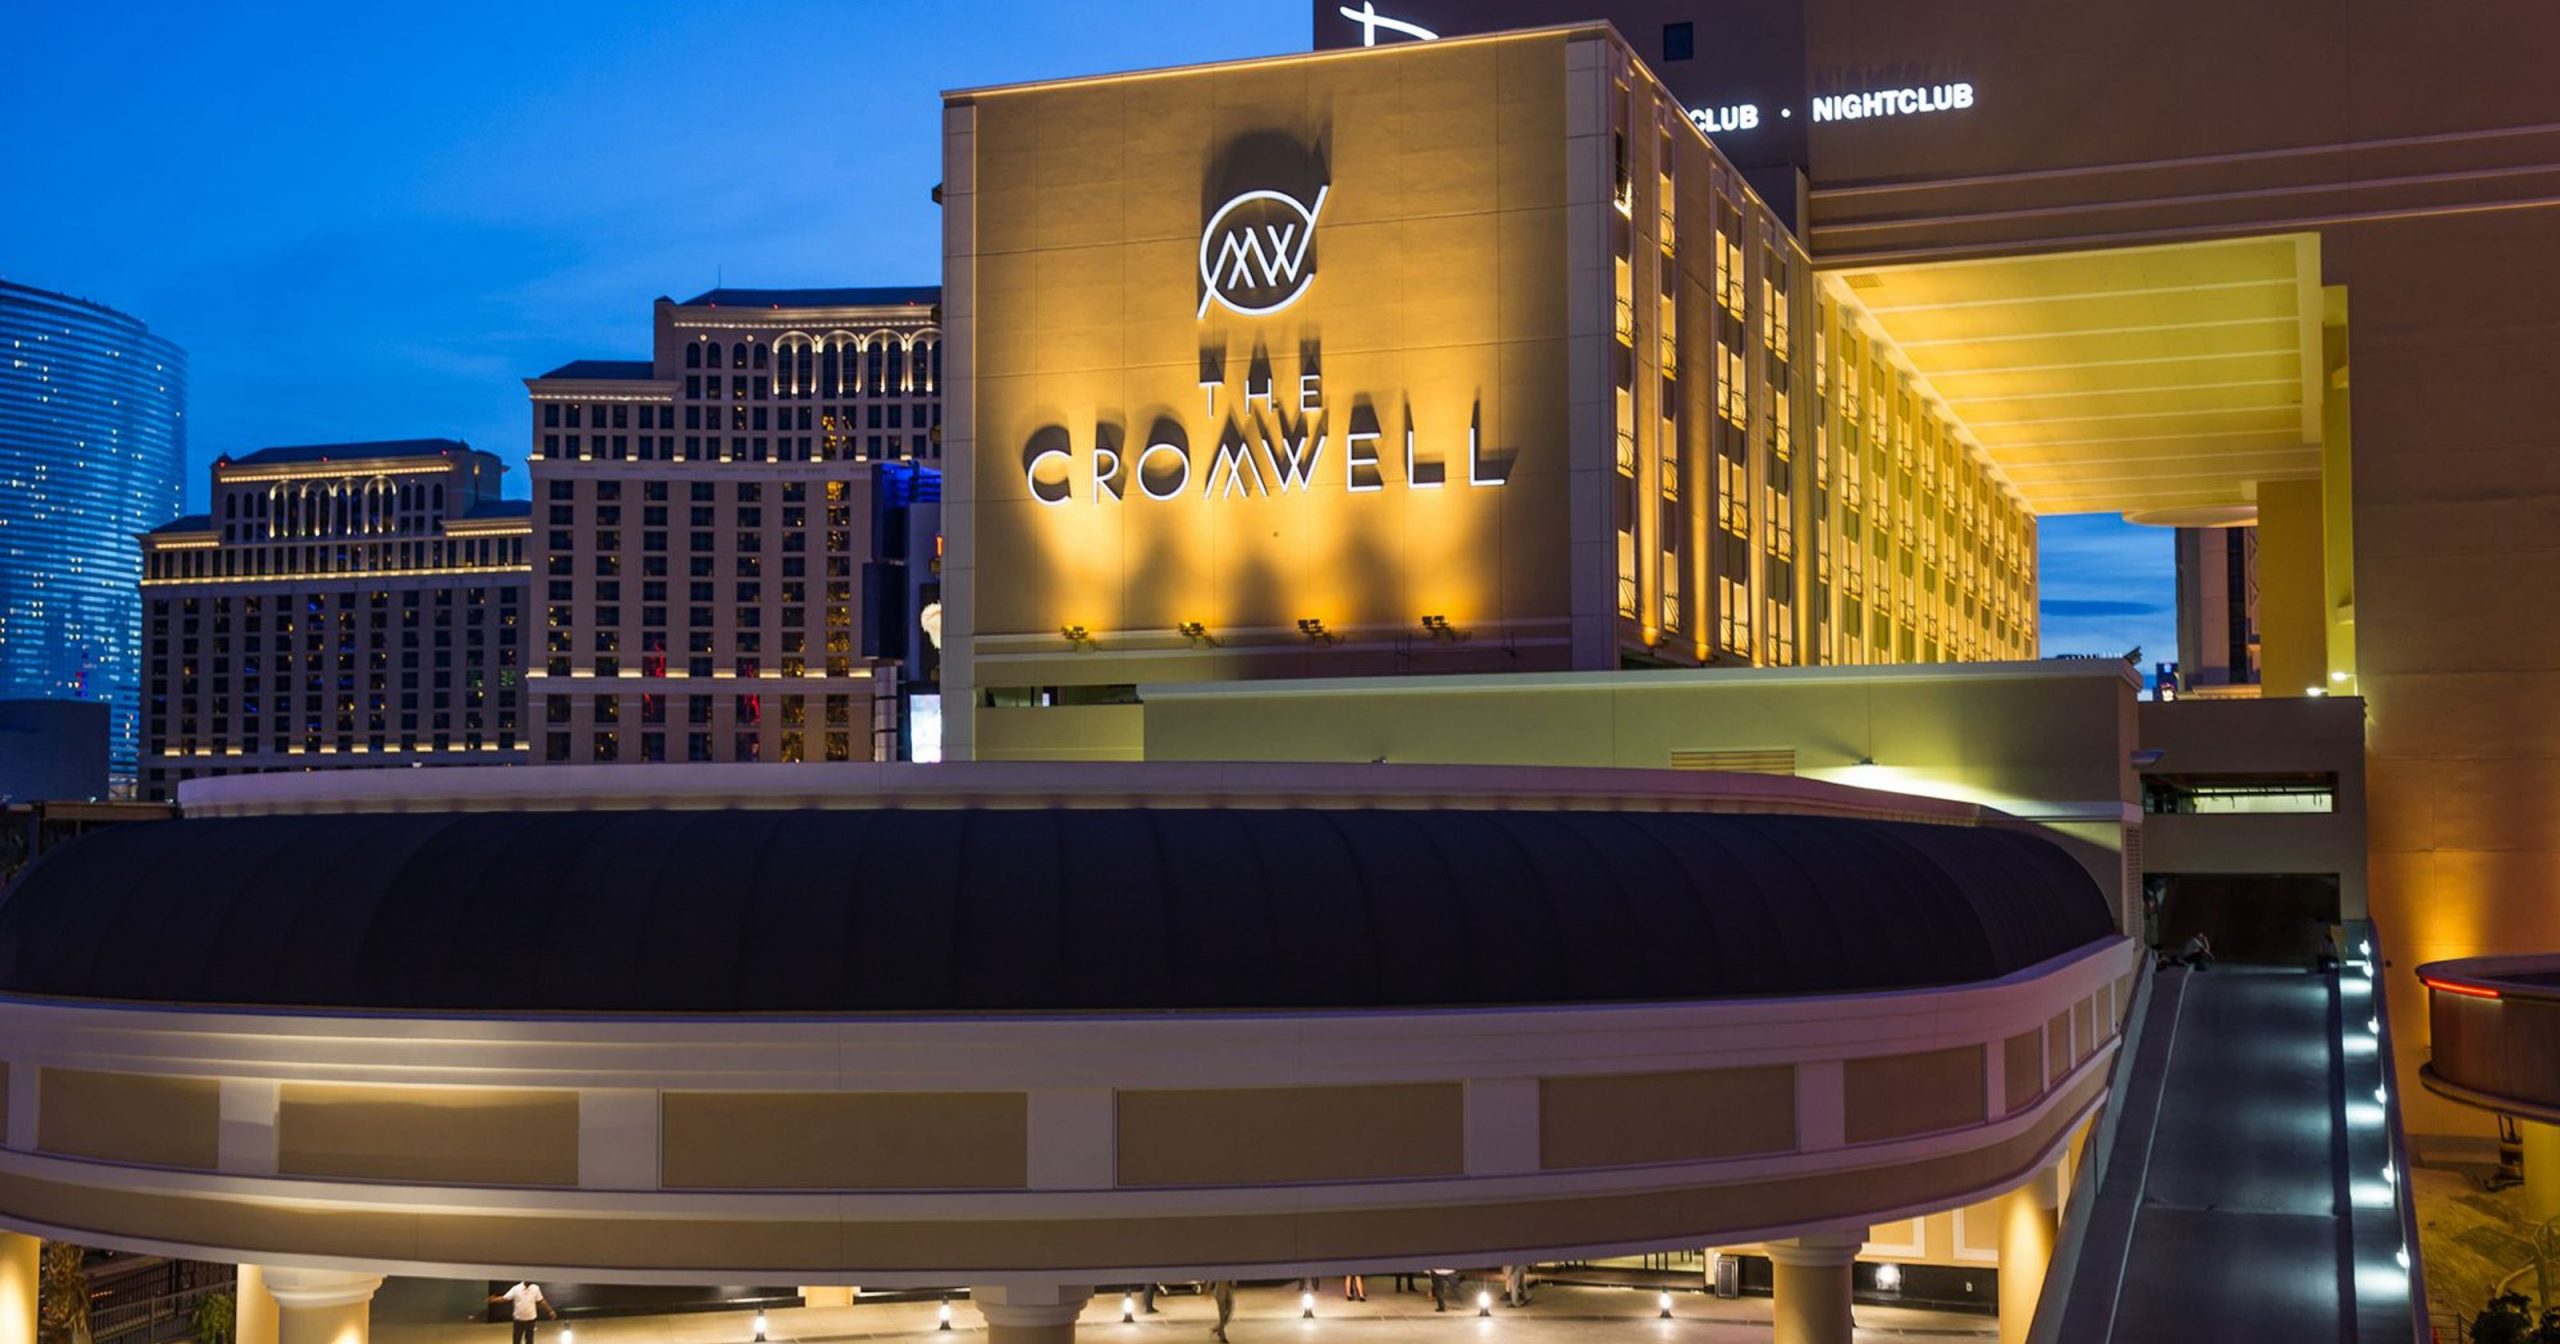 The Cromwell Casino Las Vegas, Nevada - Canopy by Metro Awnings